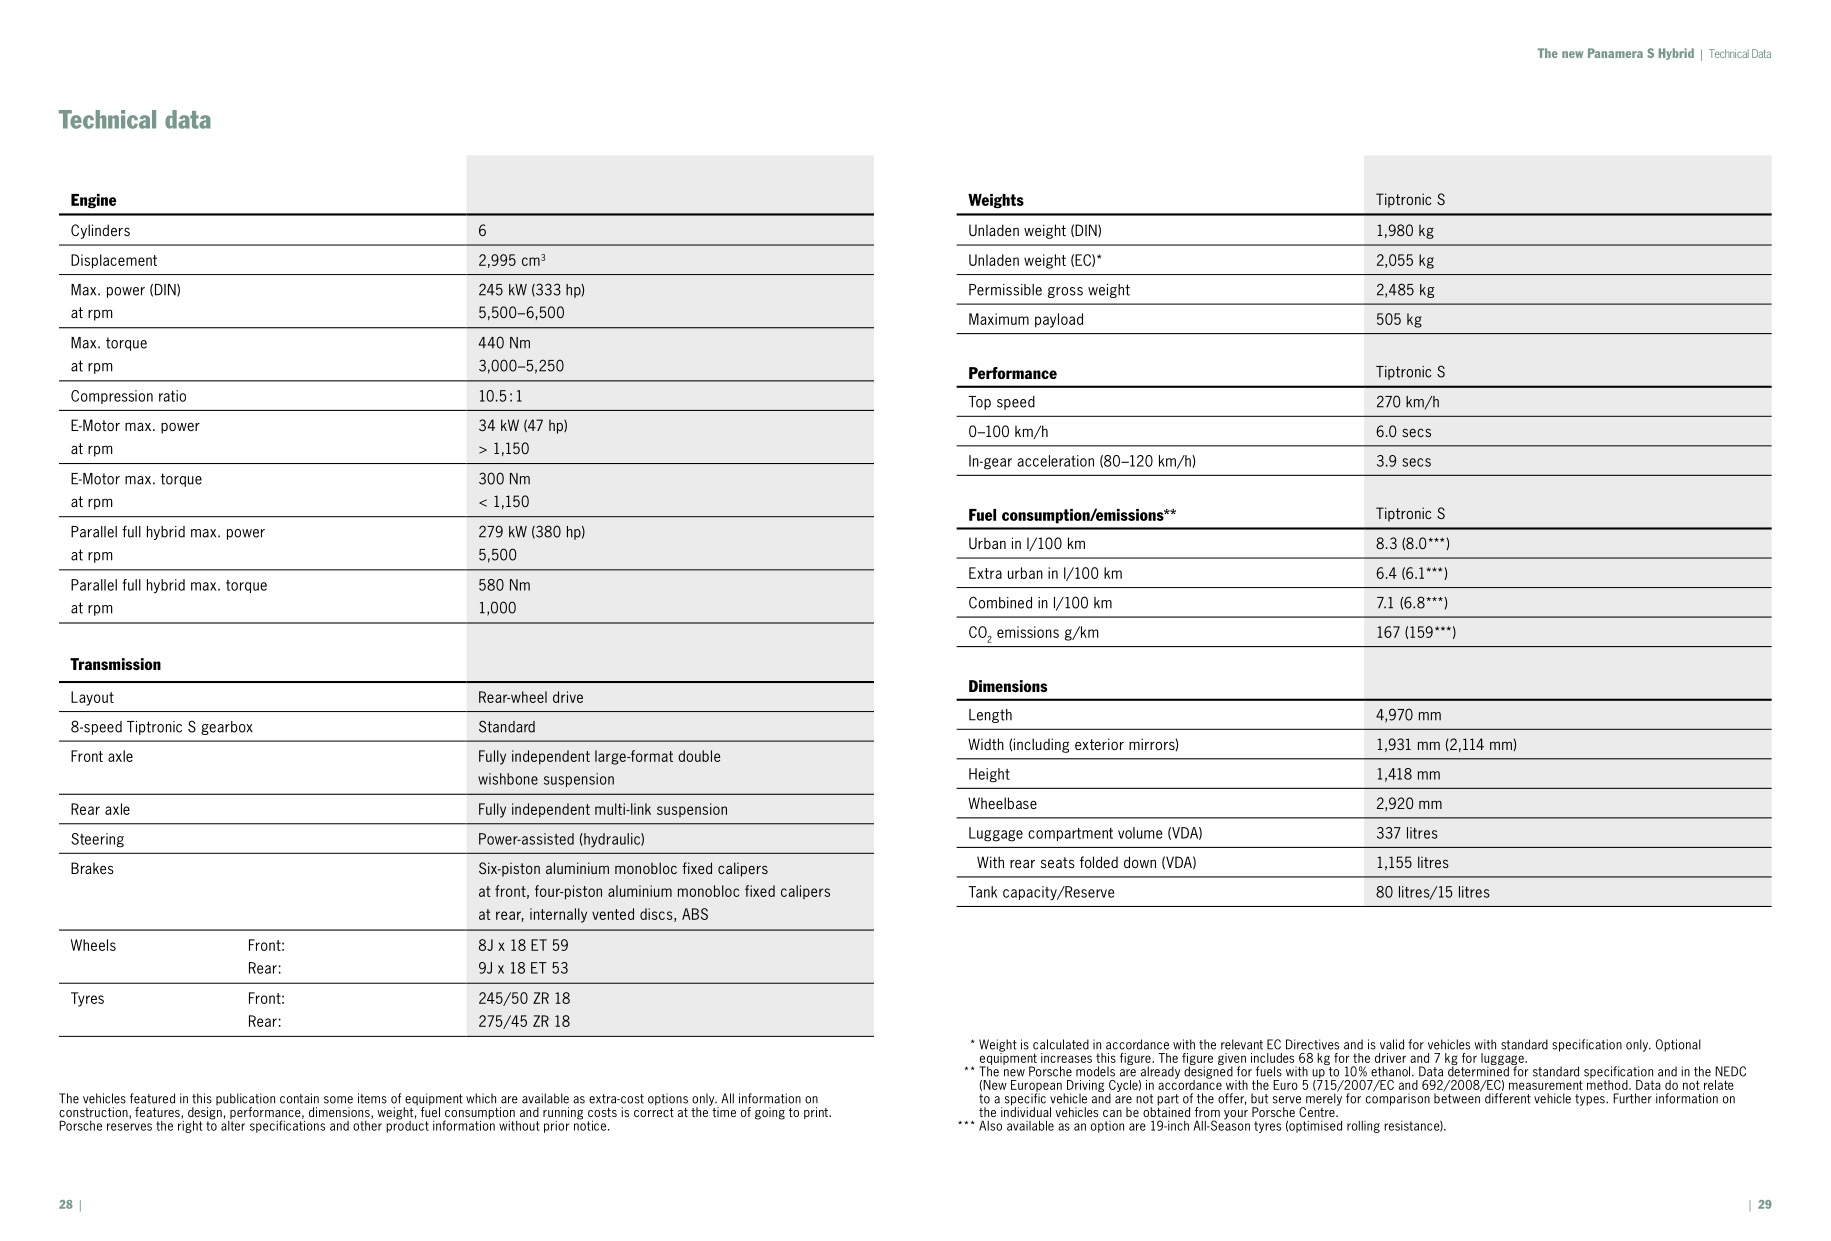 2011 Porsche Panamera Brochure Page 8